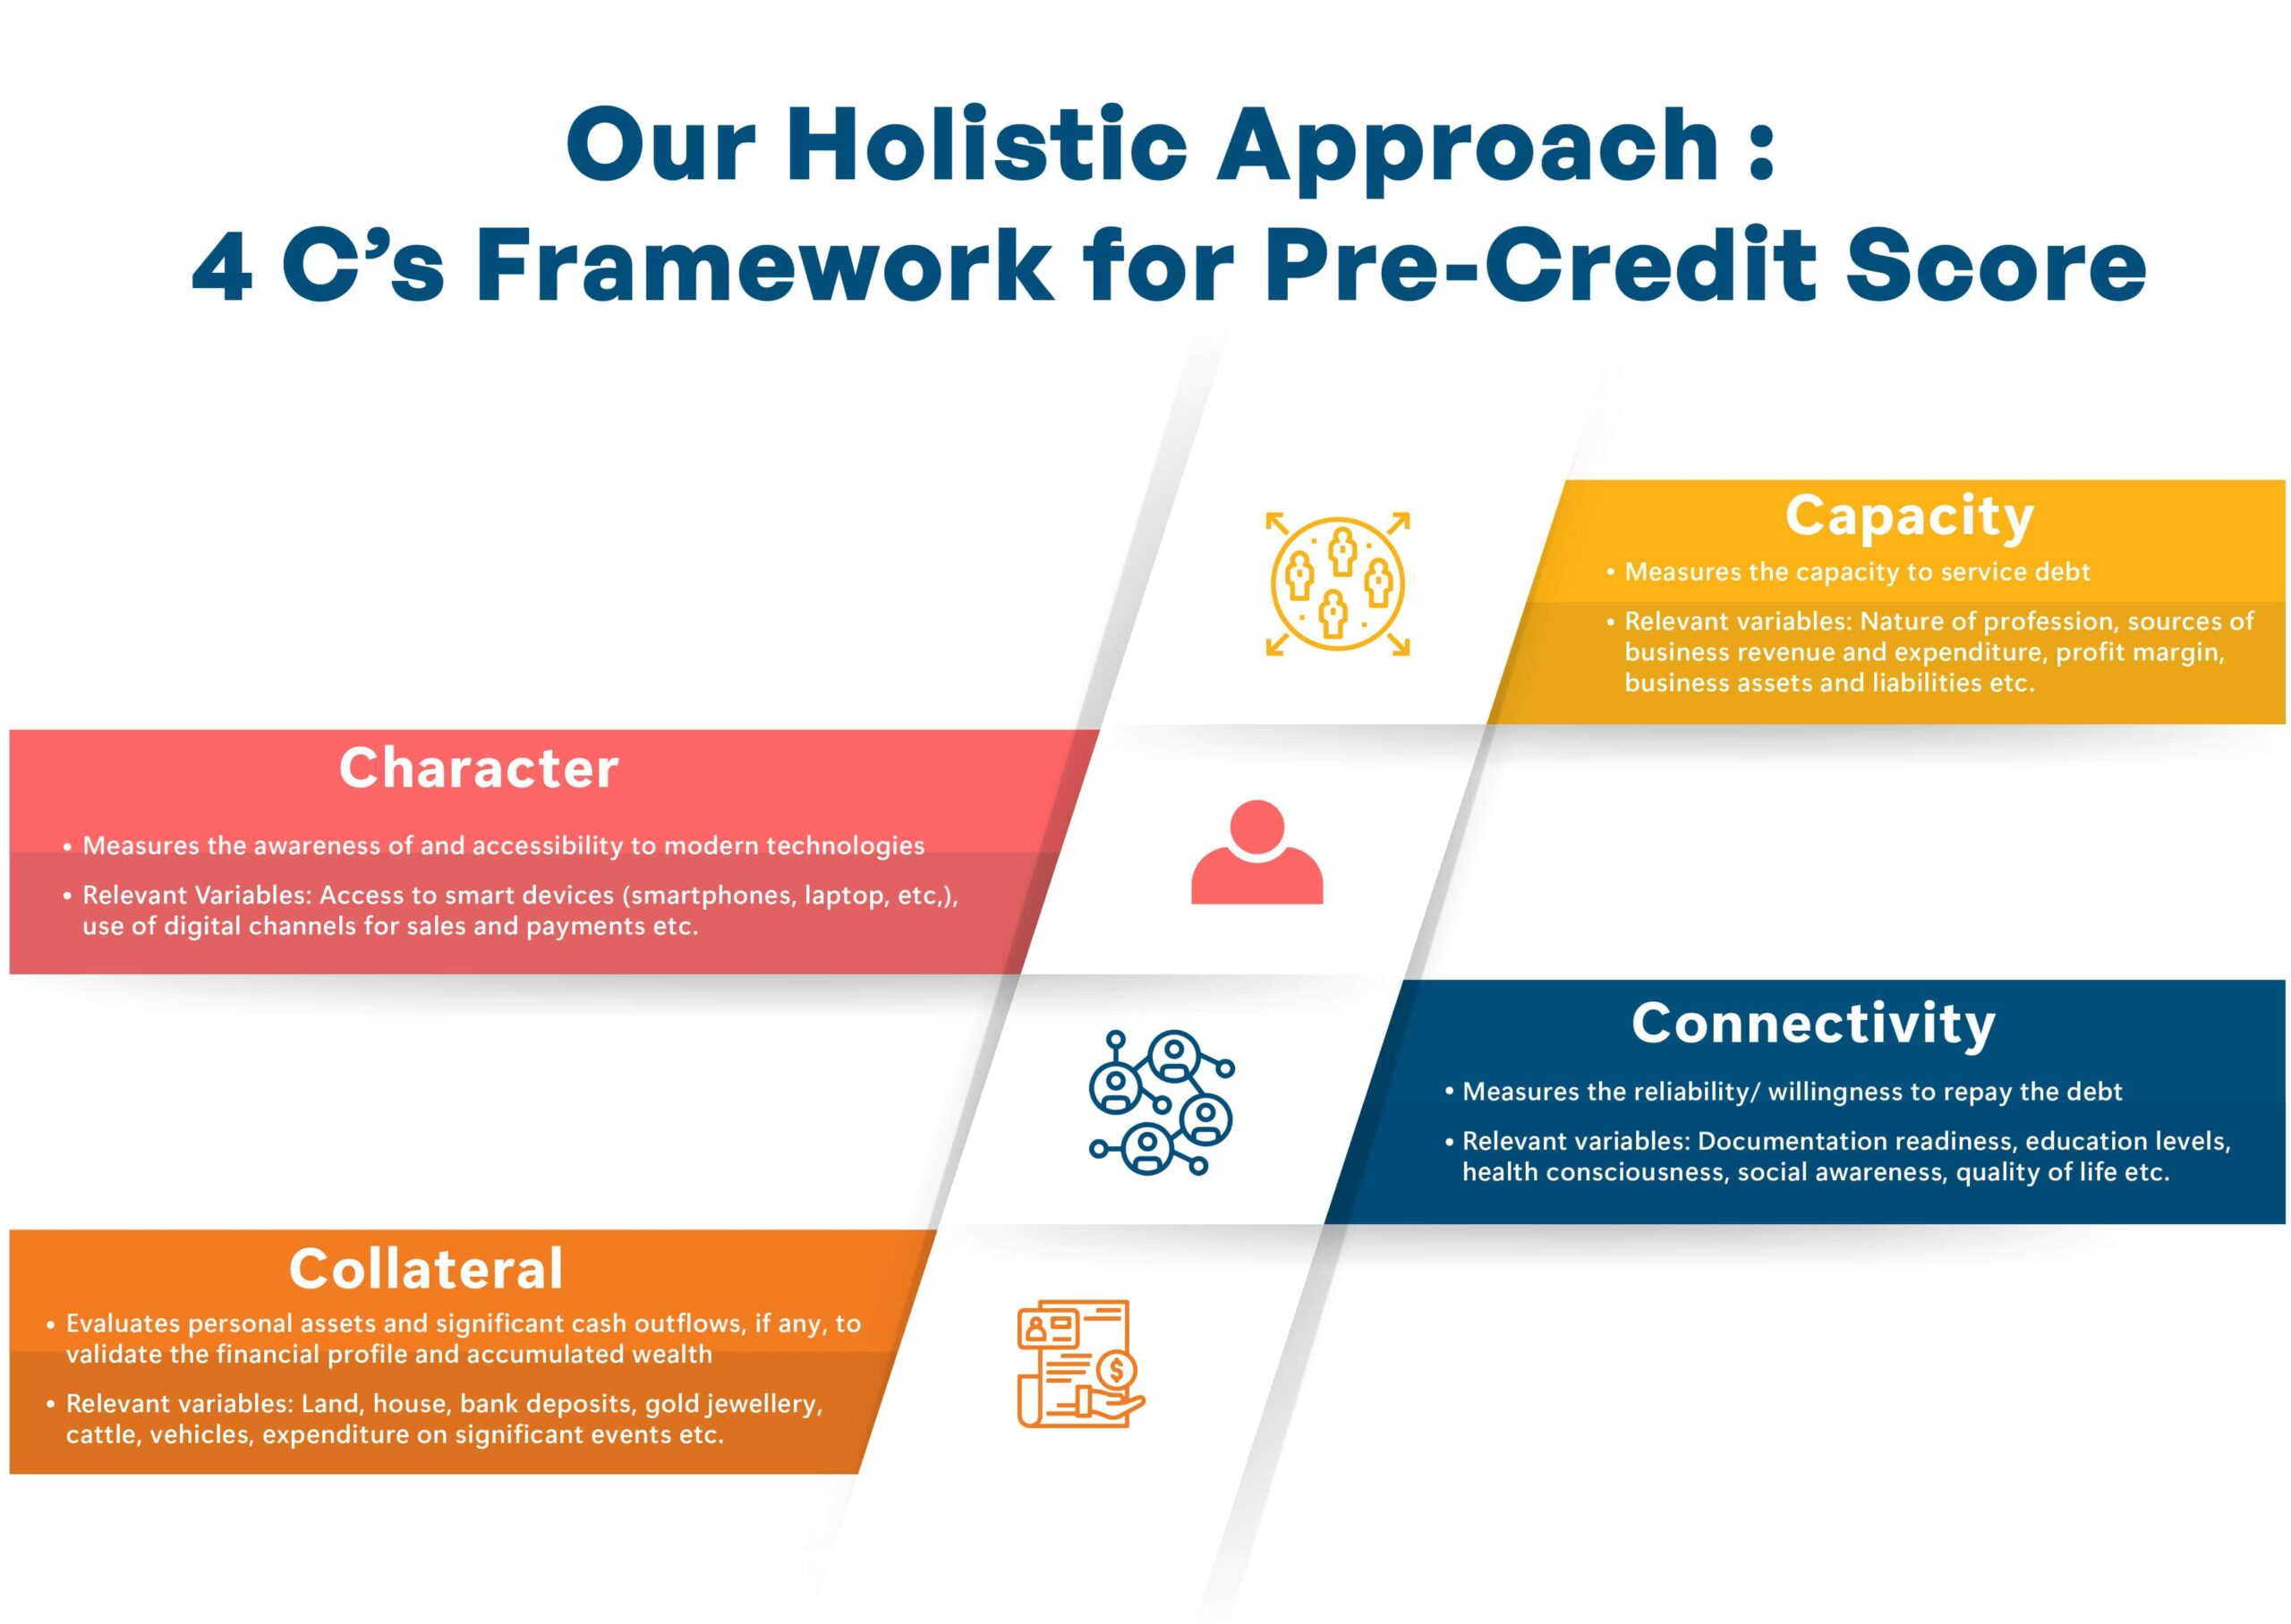 4 C's framework for Pre-Credit Score